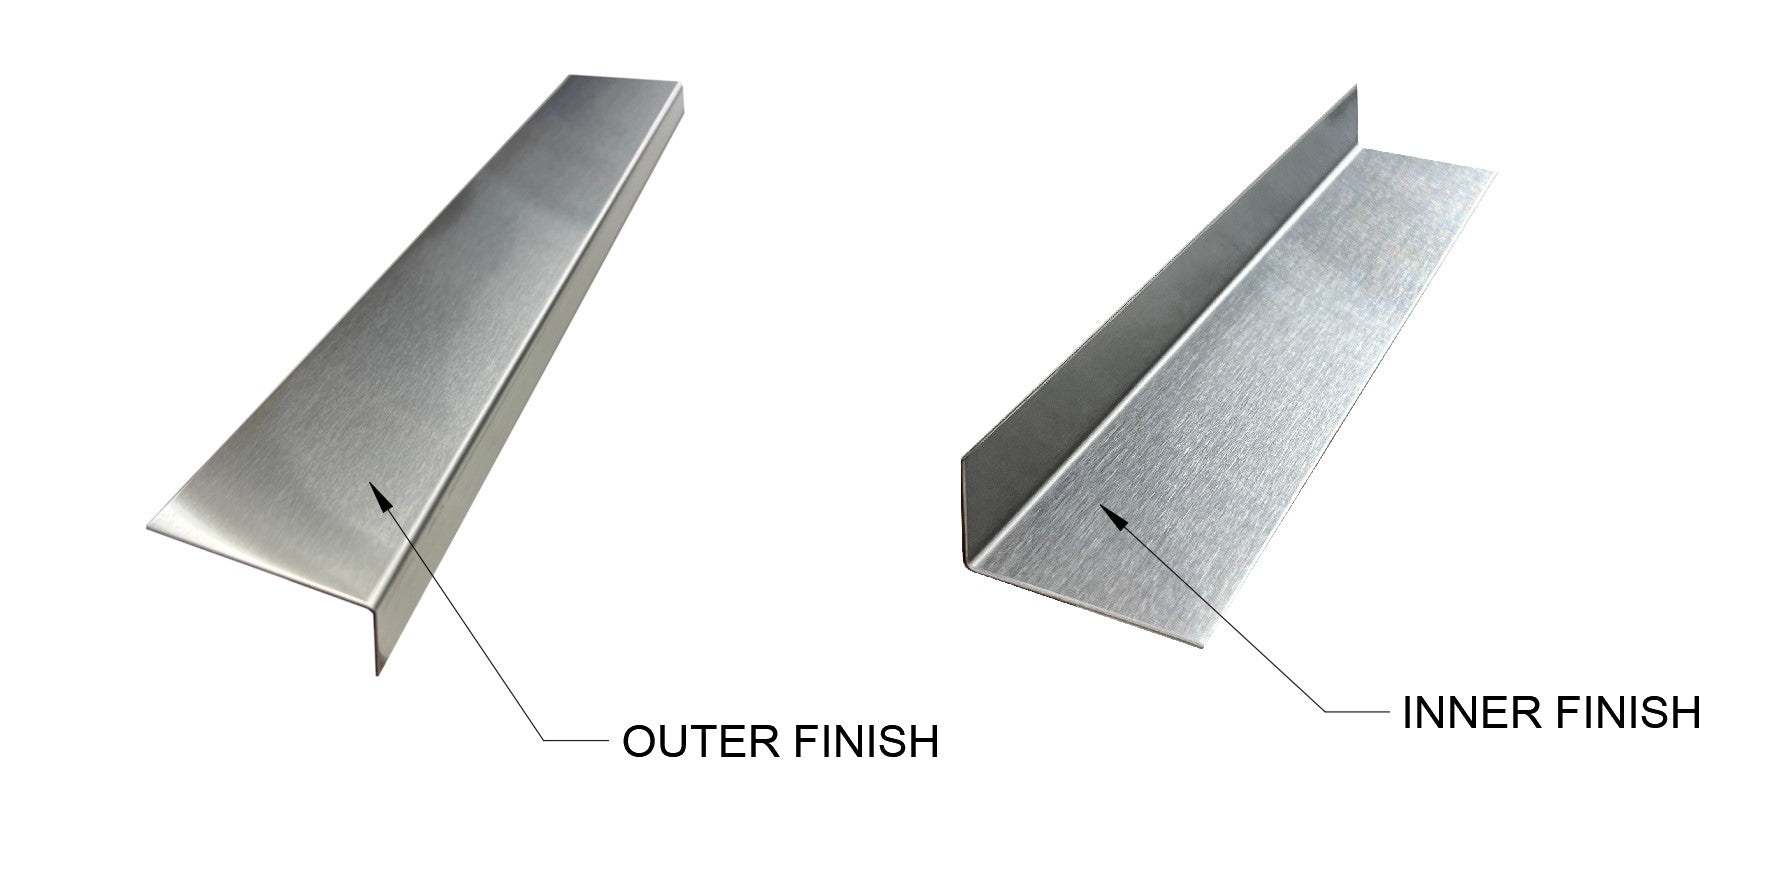 Brushed Grade 304 Stainless Steel Universal Gap Filler Finishing Angle Trim Kit Elements, 48in Long